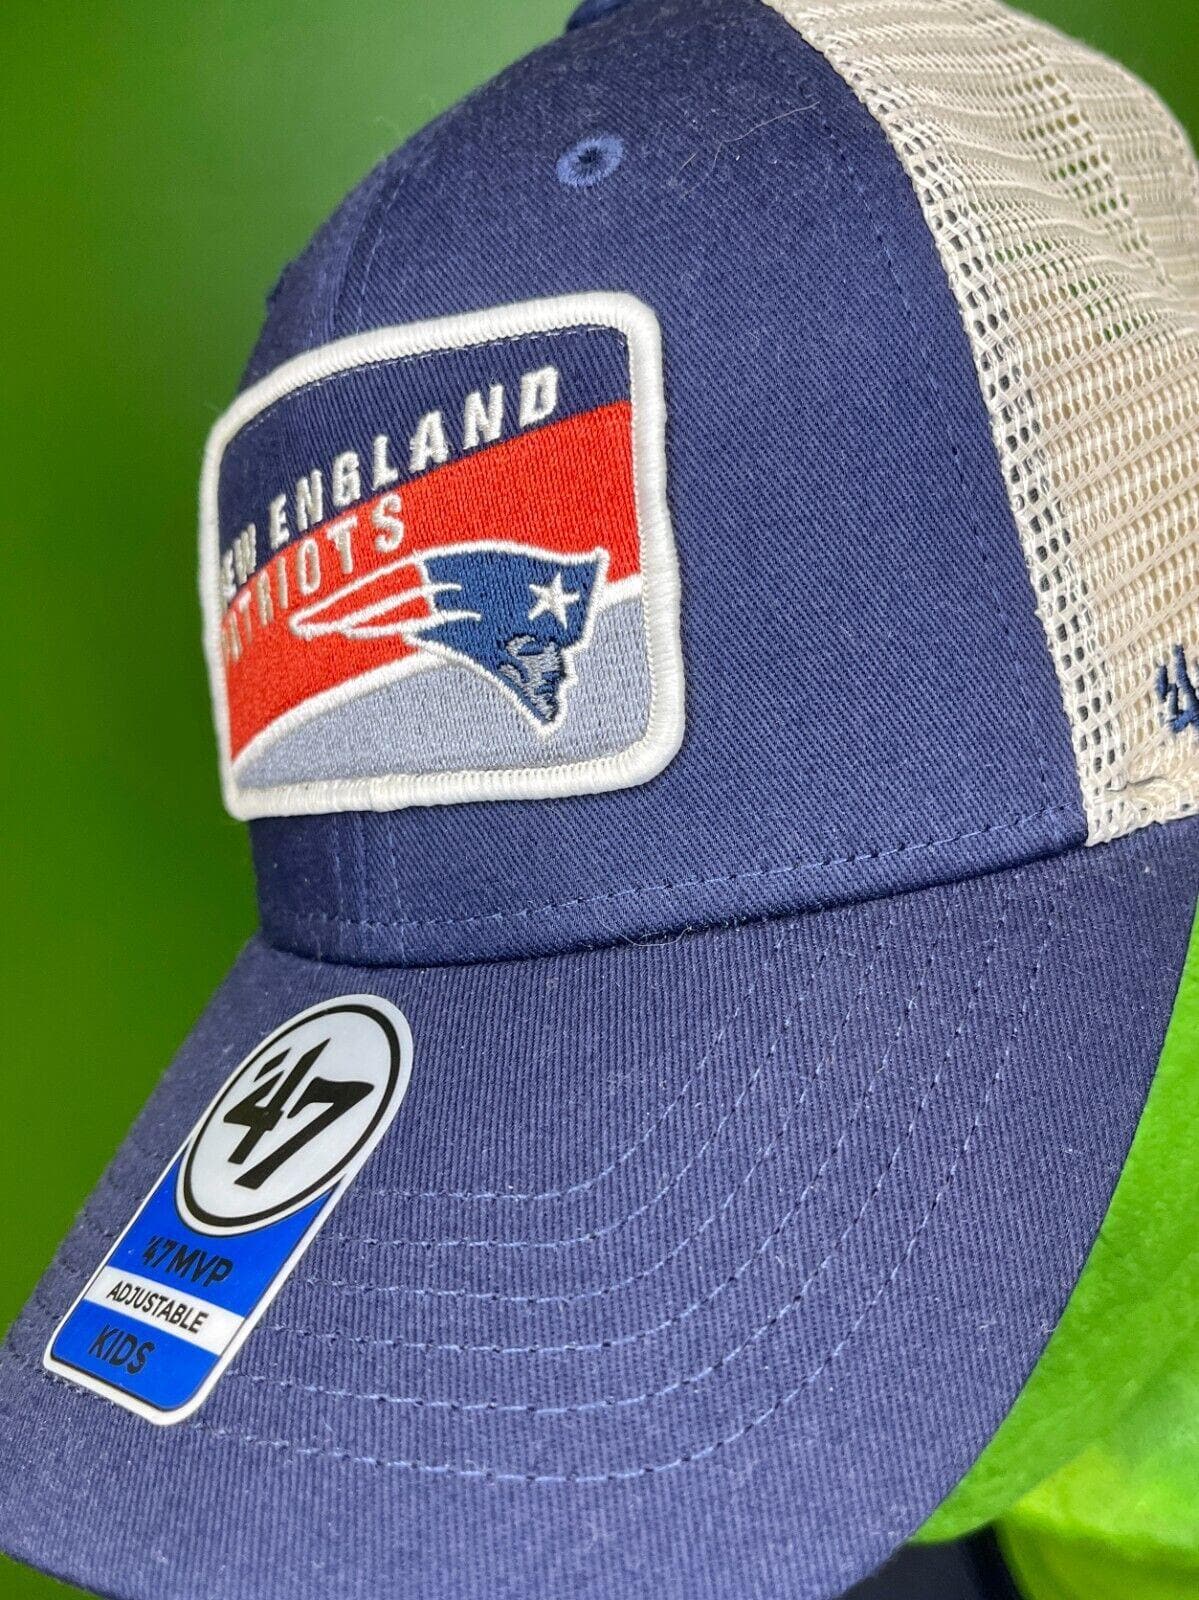 NFL New England Patriots '47 Brand Trucker Cap Youth OSFA NWT - End Zone Kit